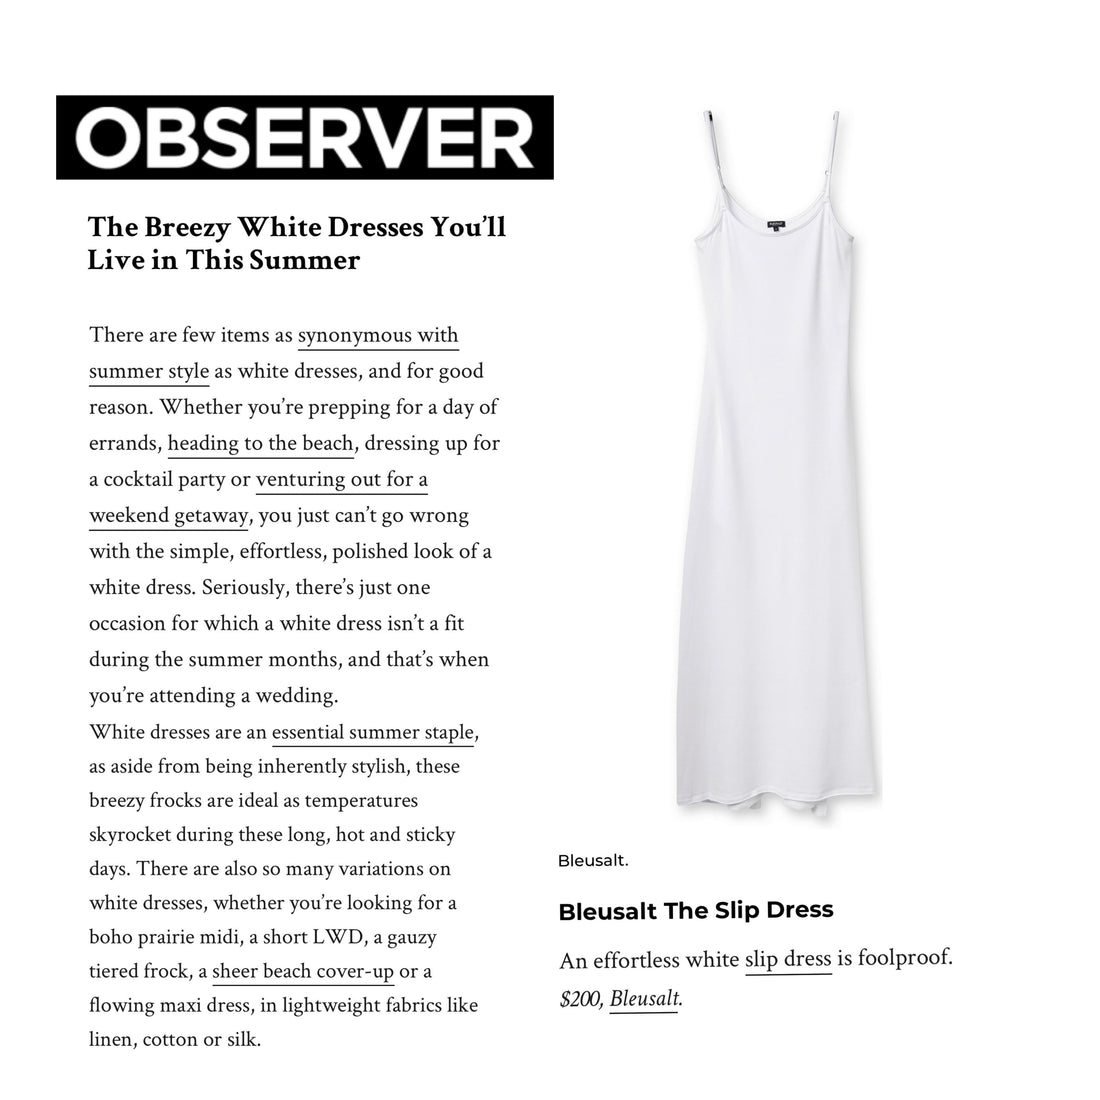 The Breezy White Dresses You'll Live in This Summer-Bleusalt